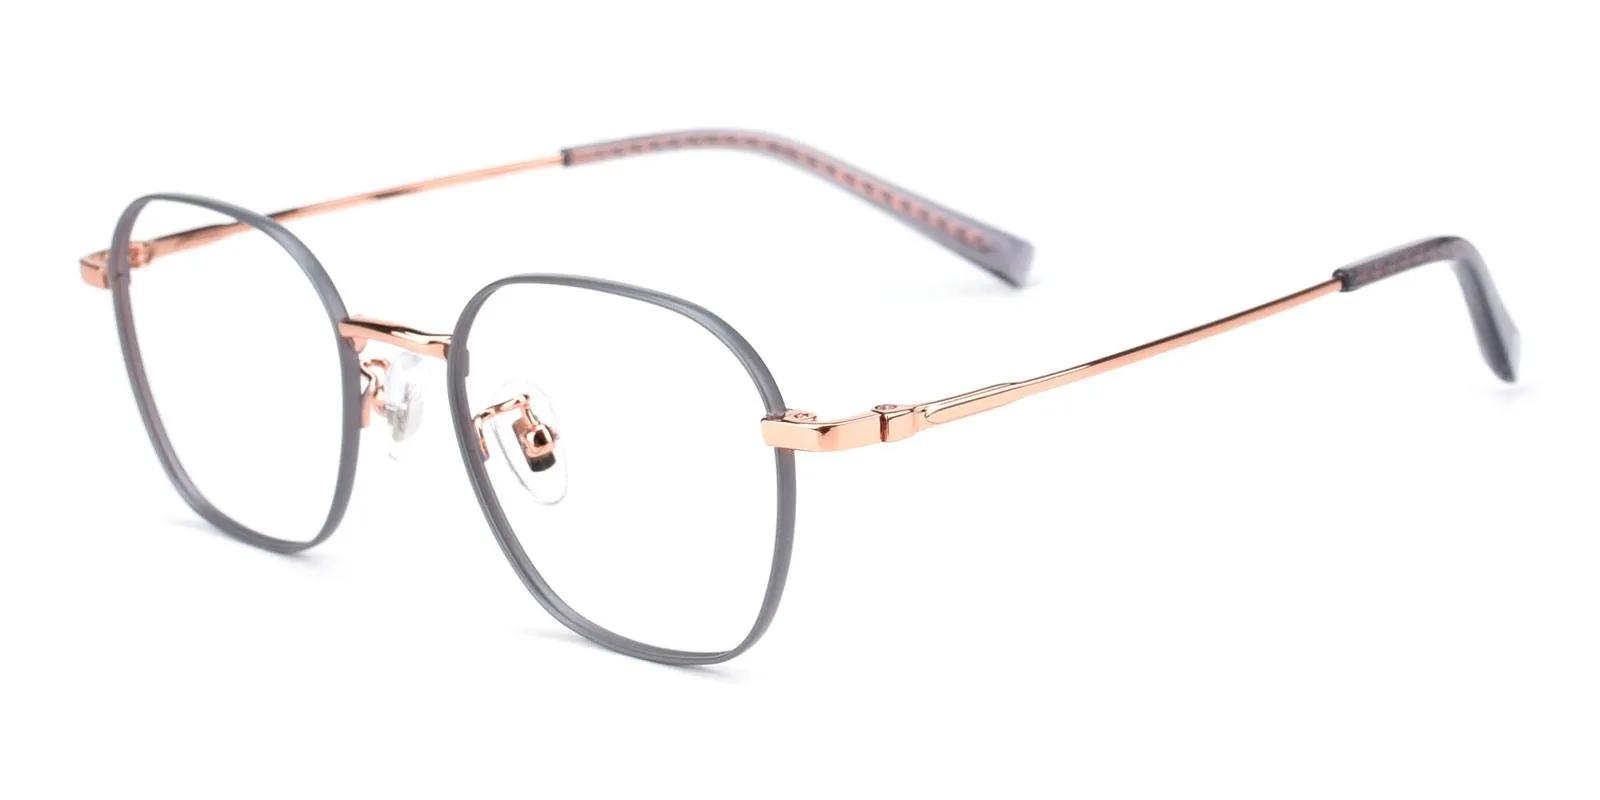 Udeify Gray Titanium Eyeglasses , NosePads Frames from ABBE Glasses